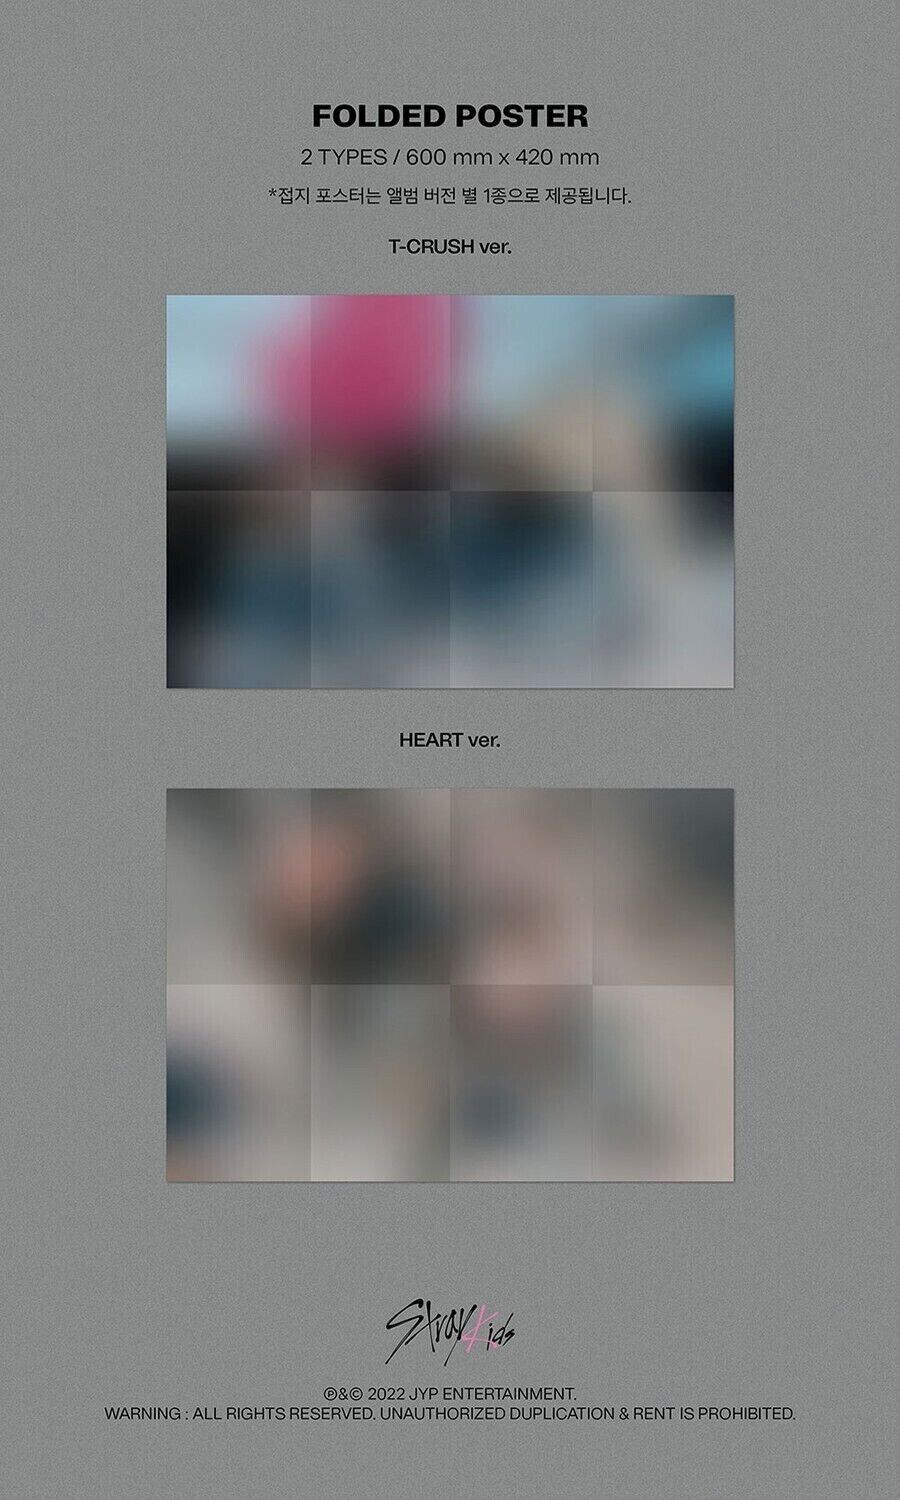 STRAY KIDS Mini Album [MAXIDENT] Standard HEART Ver CD+P.Book+2p  P.Card+M.Poster